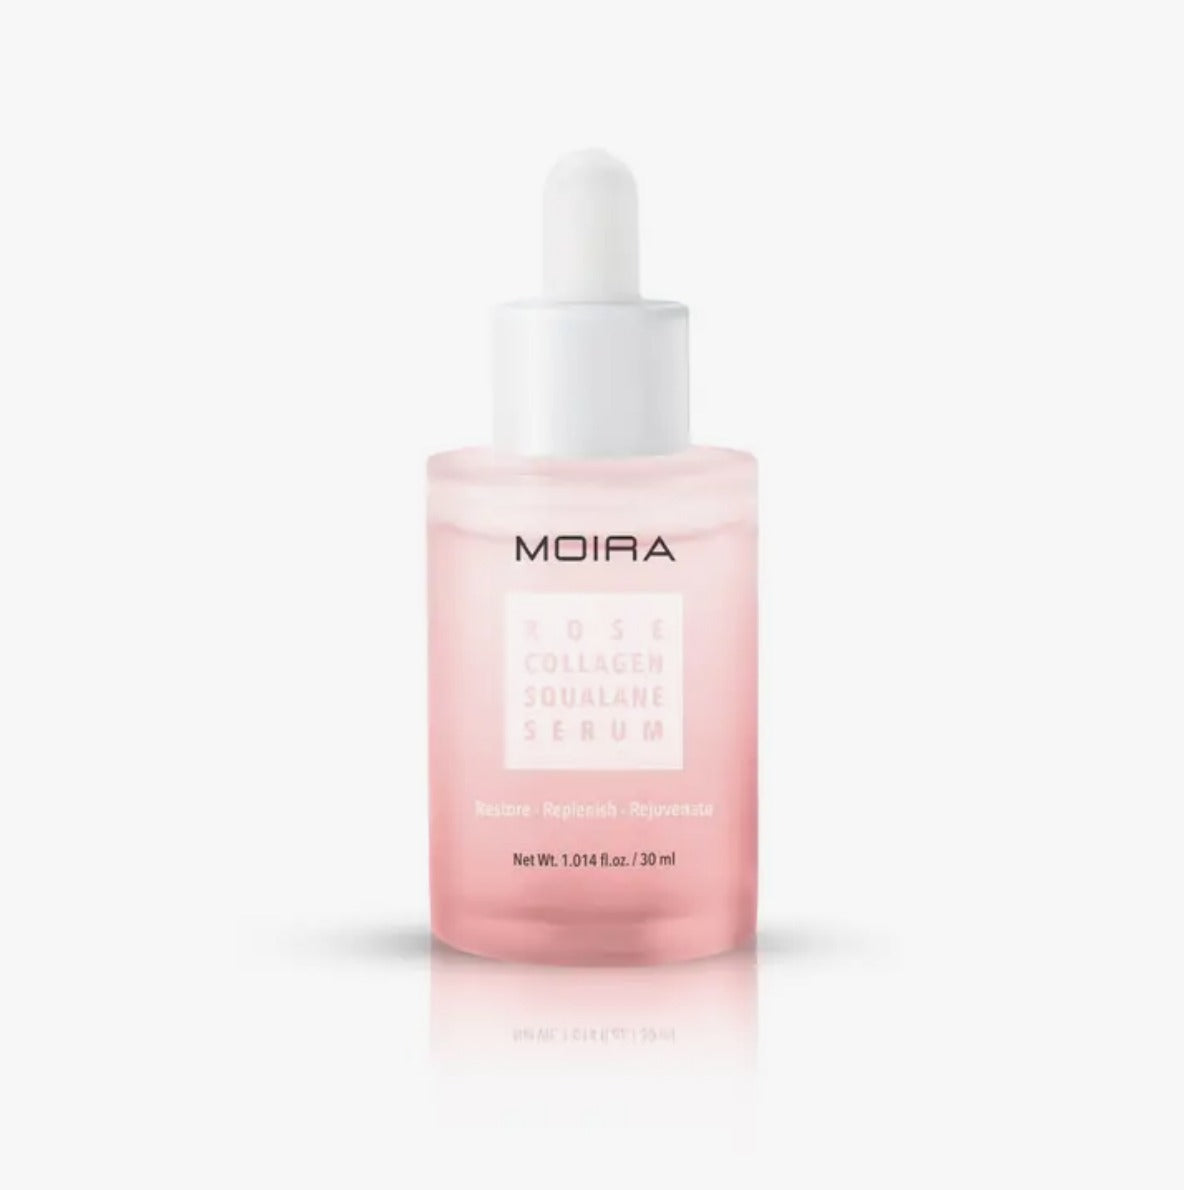 Moira Cosmetics, Rose Collagen Squalane Serum, Korean Cosmetics